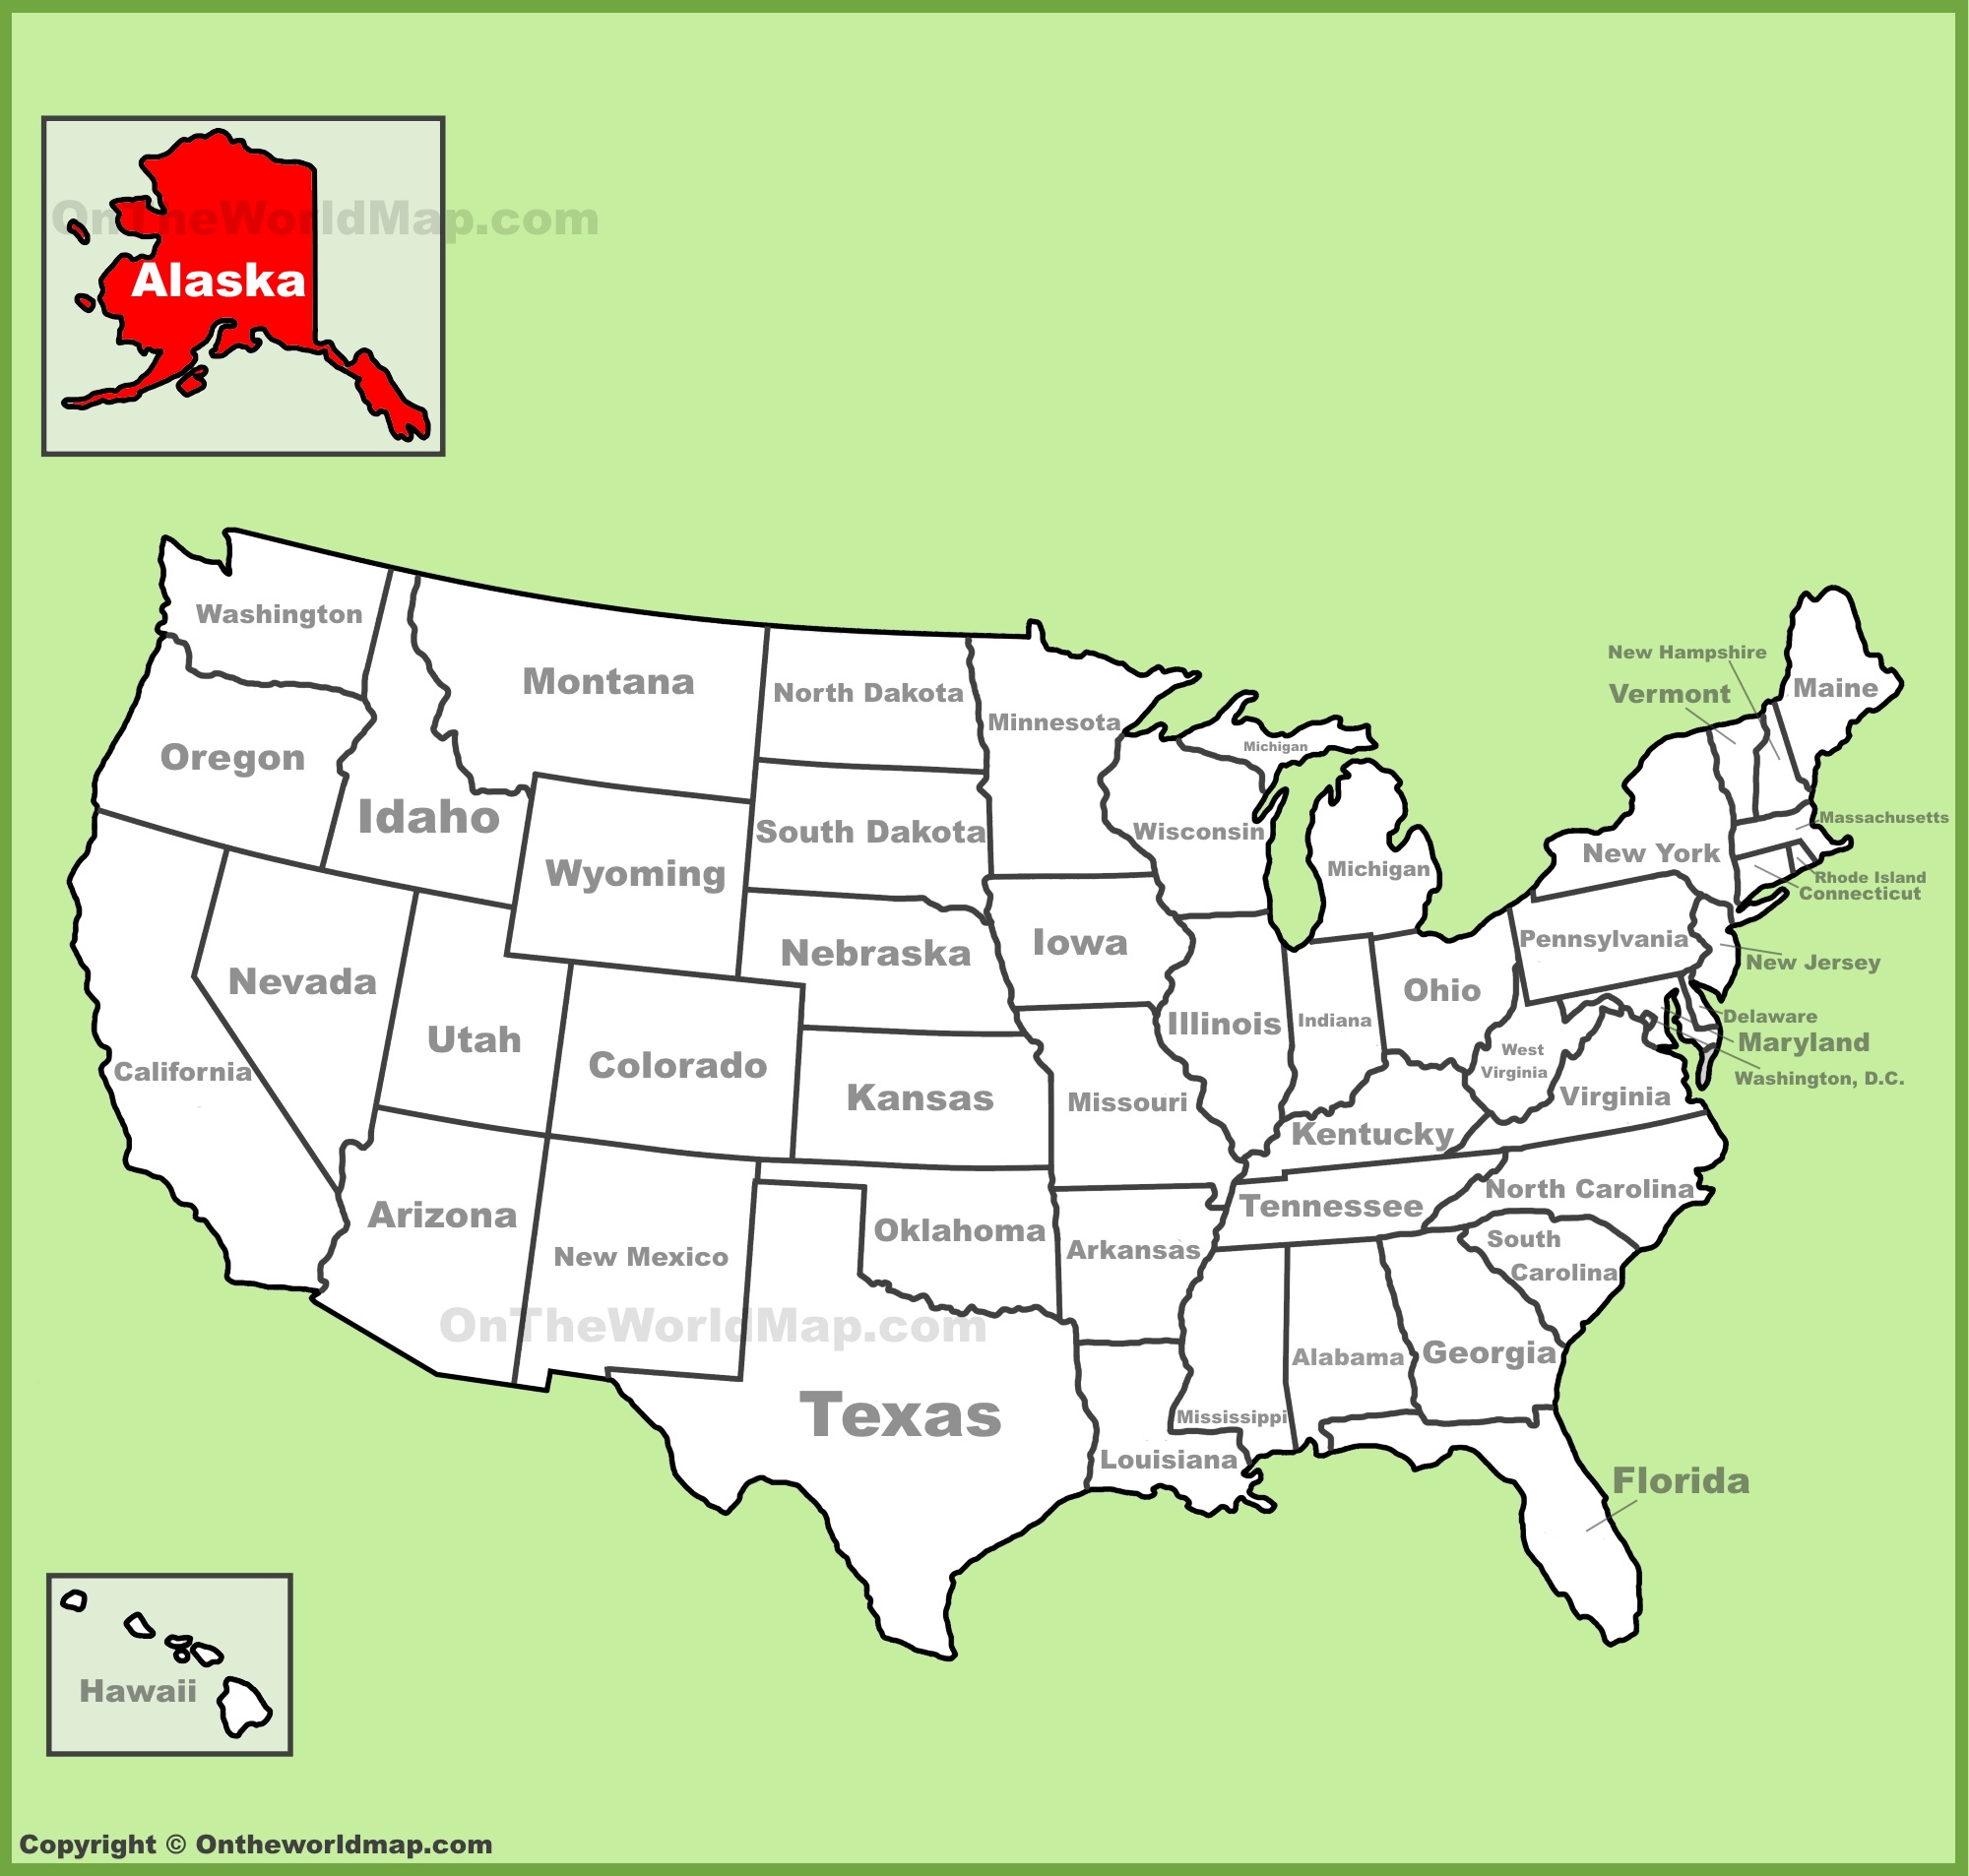 Alaska Location On The U S Map